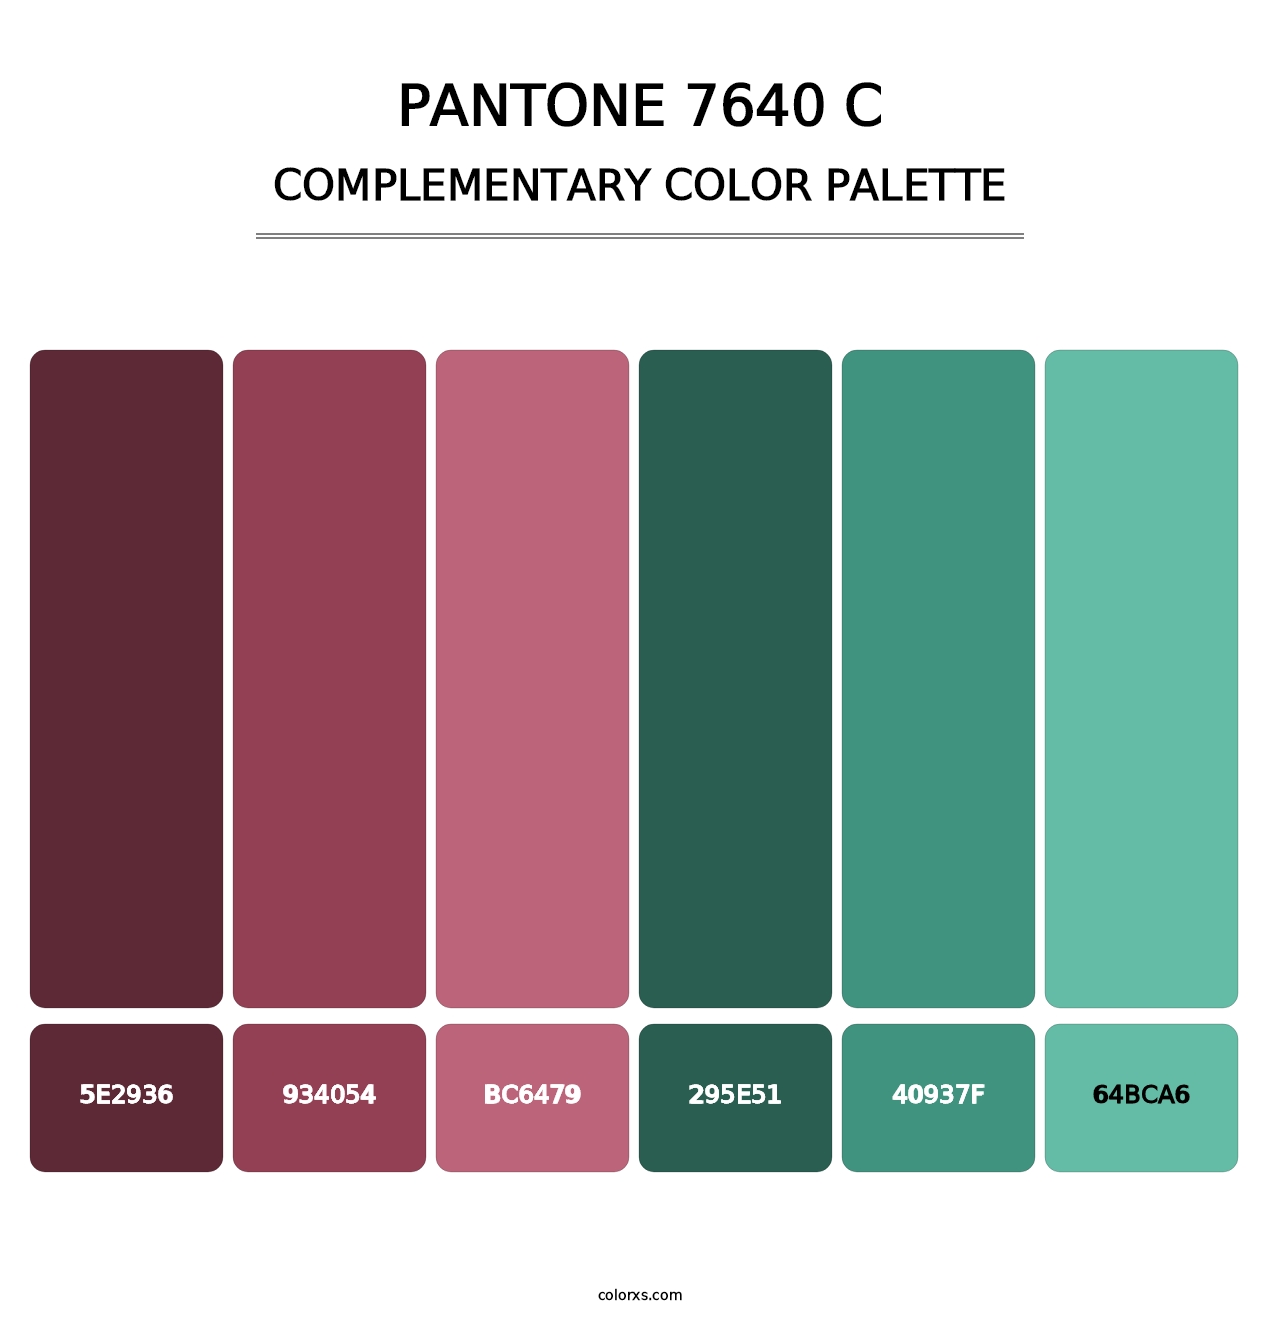 PANTONE 7640 C - Complementary Color Palette